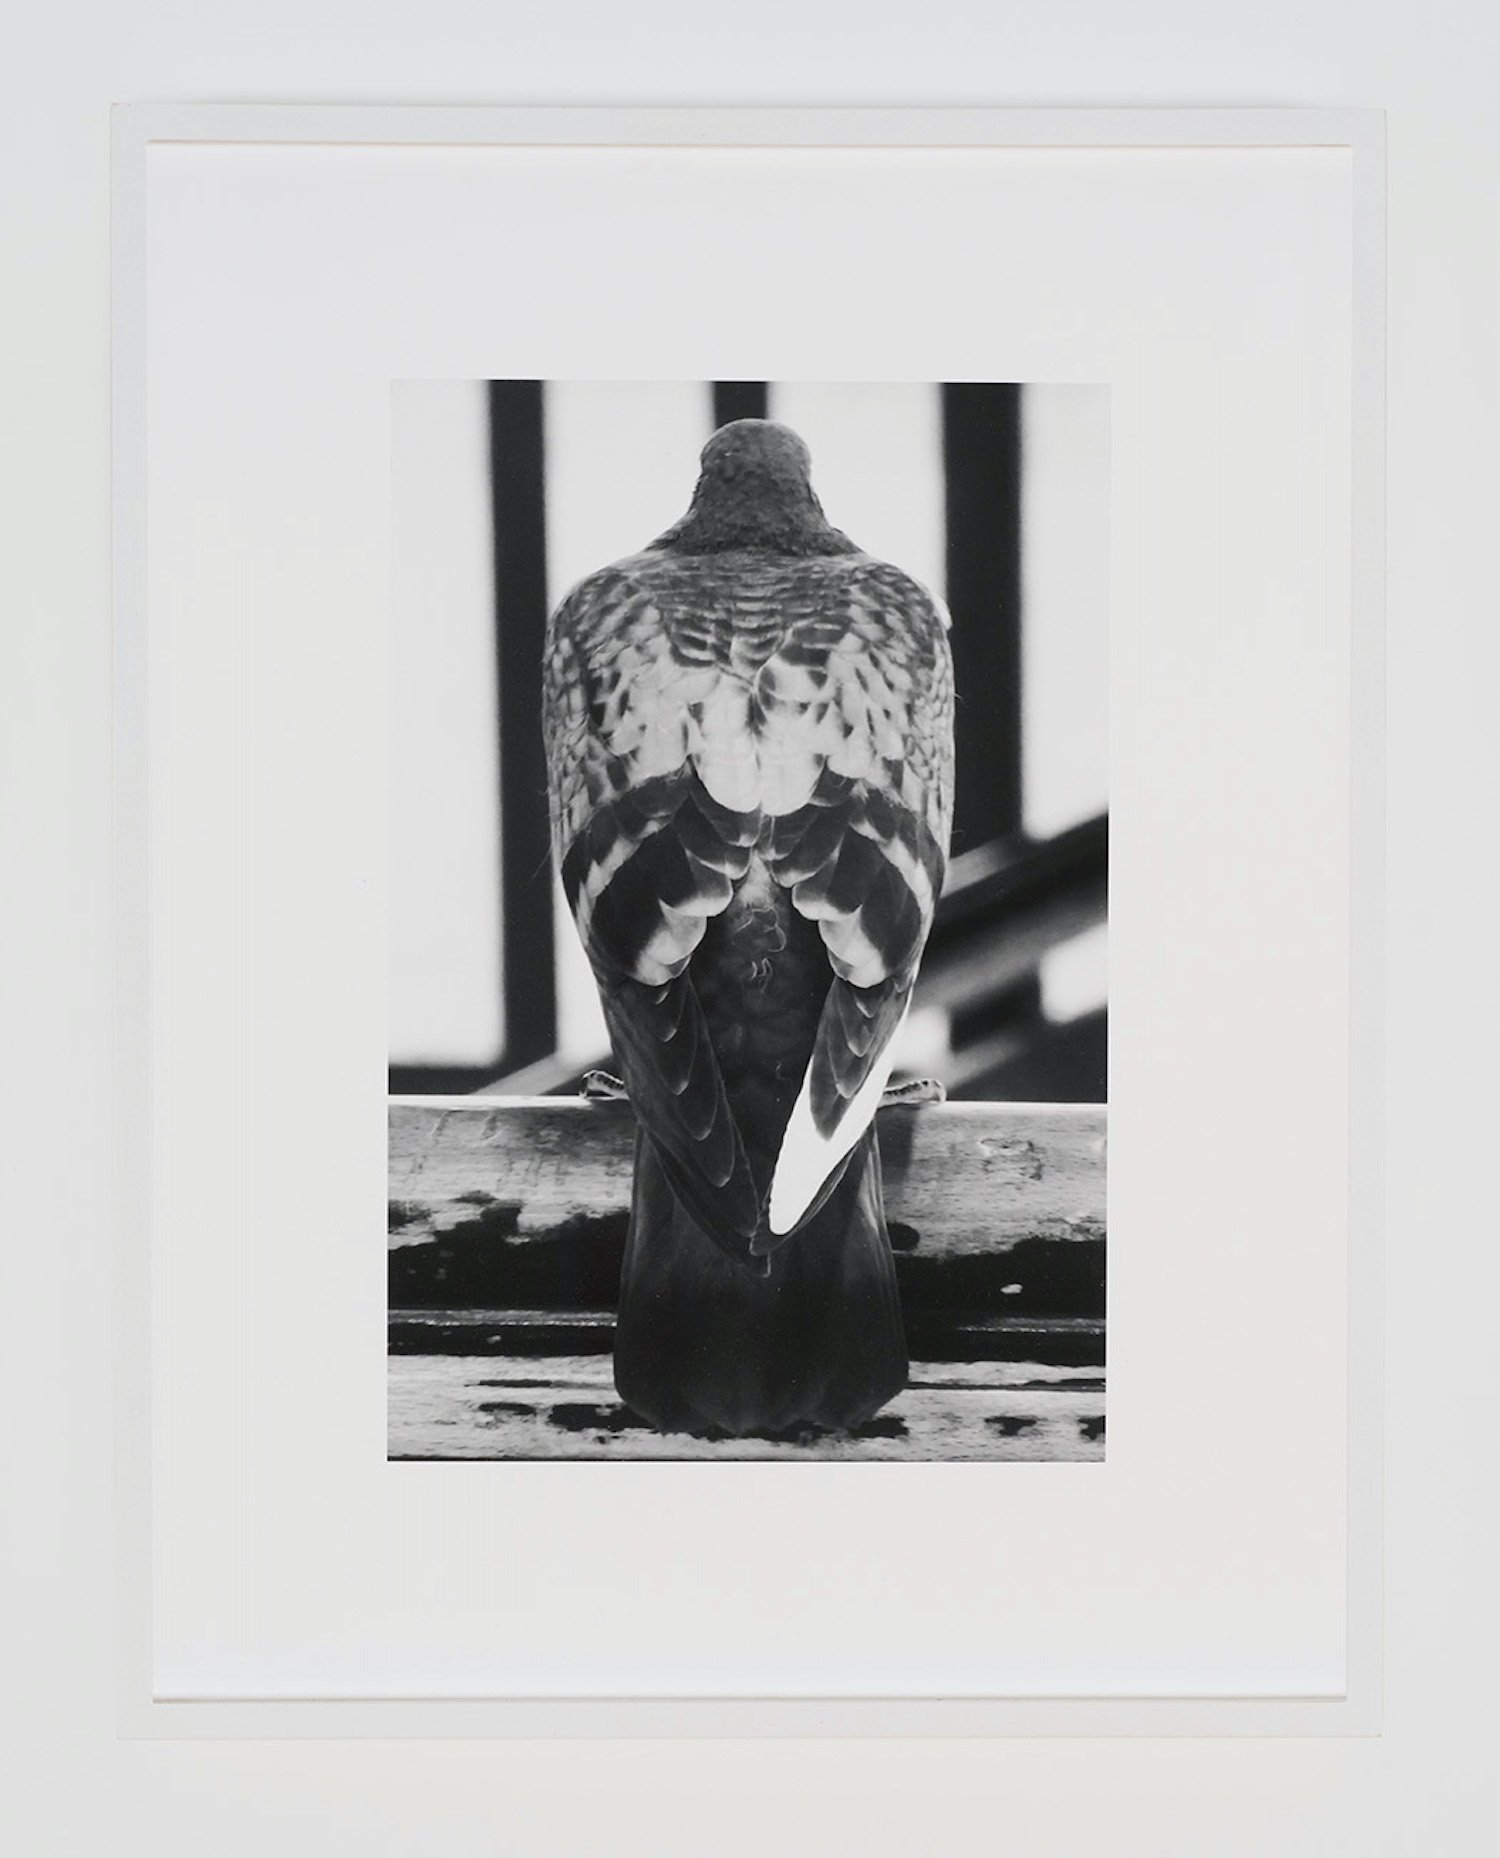  pigeon 2021  28 x 36 cm, archival pigment print on cotton rag (ed. of 3 + 1 ap) 